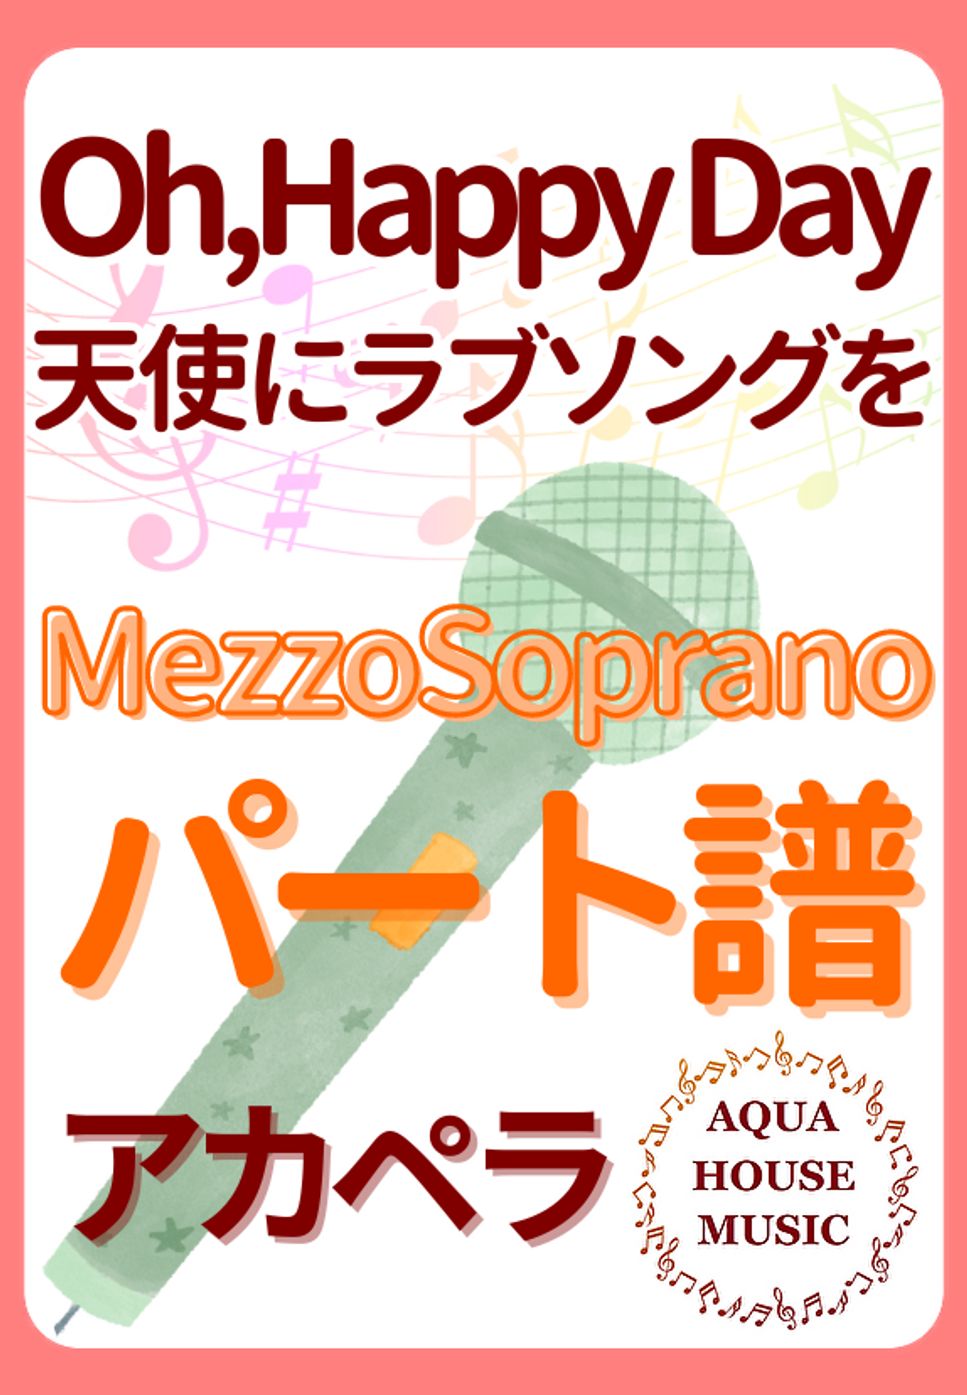 Oh, Happy Day (アカペラ楽譜♪MezzoSopranoパート譜) by 飯田 亜紗子